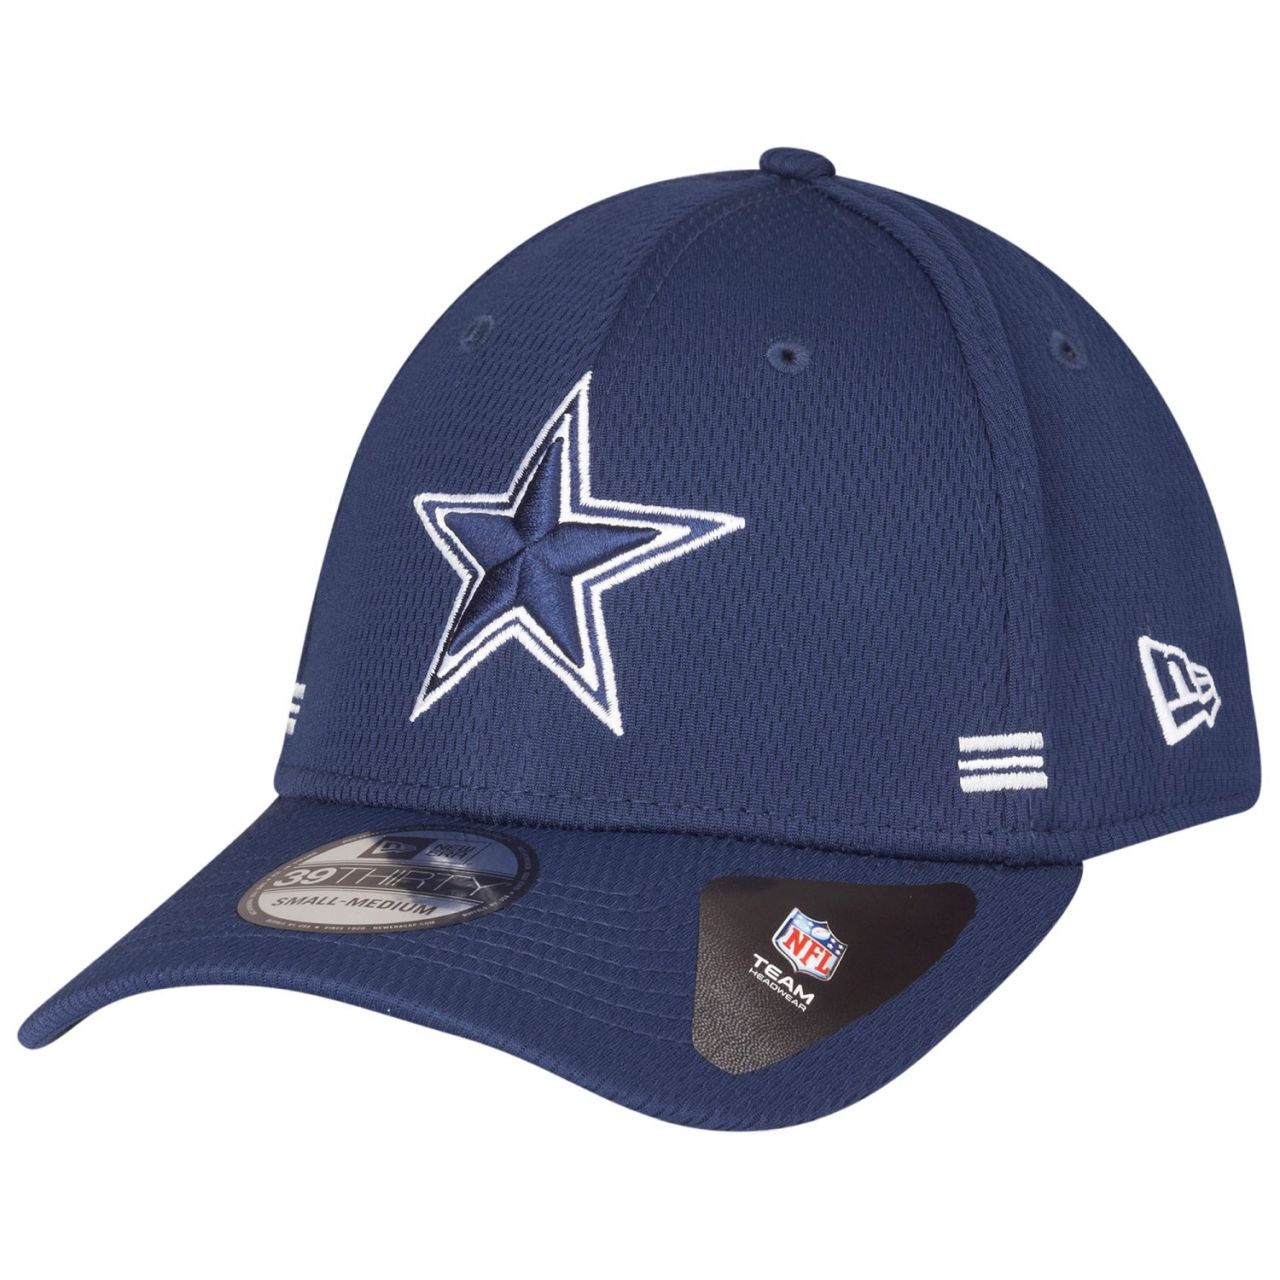 amfoo - New Era 39Thirty Stretch Cap - HOMETOWN Dallas Cowboys